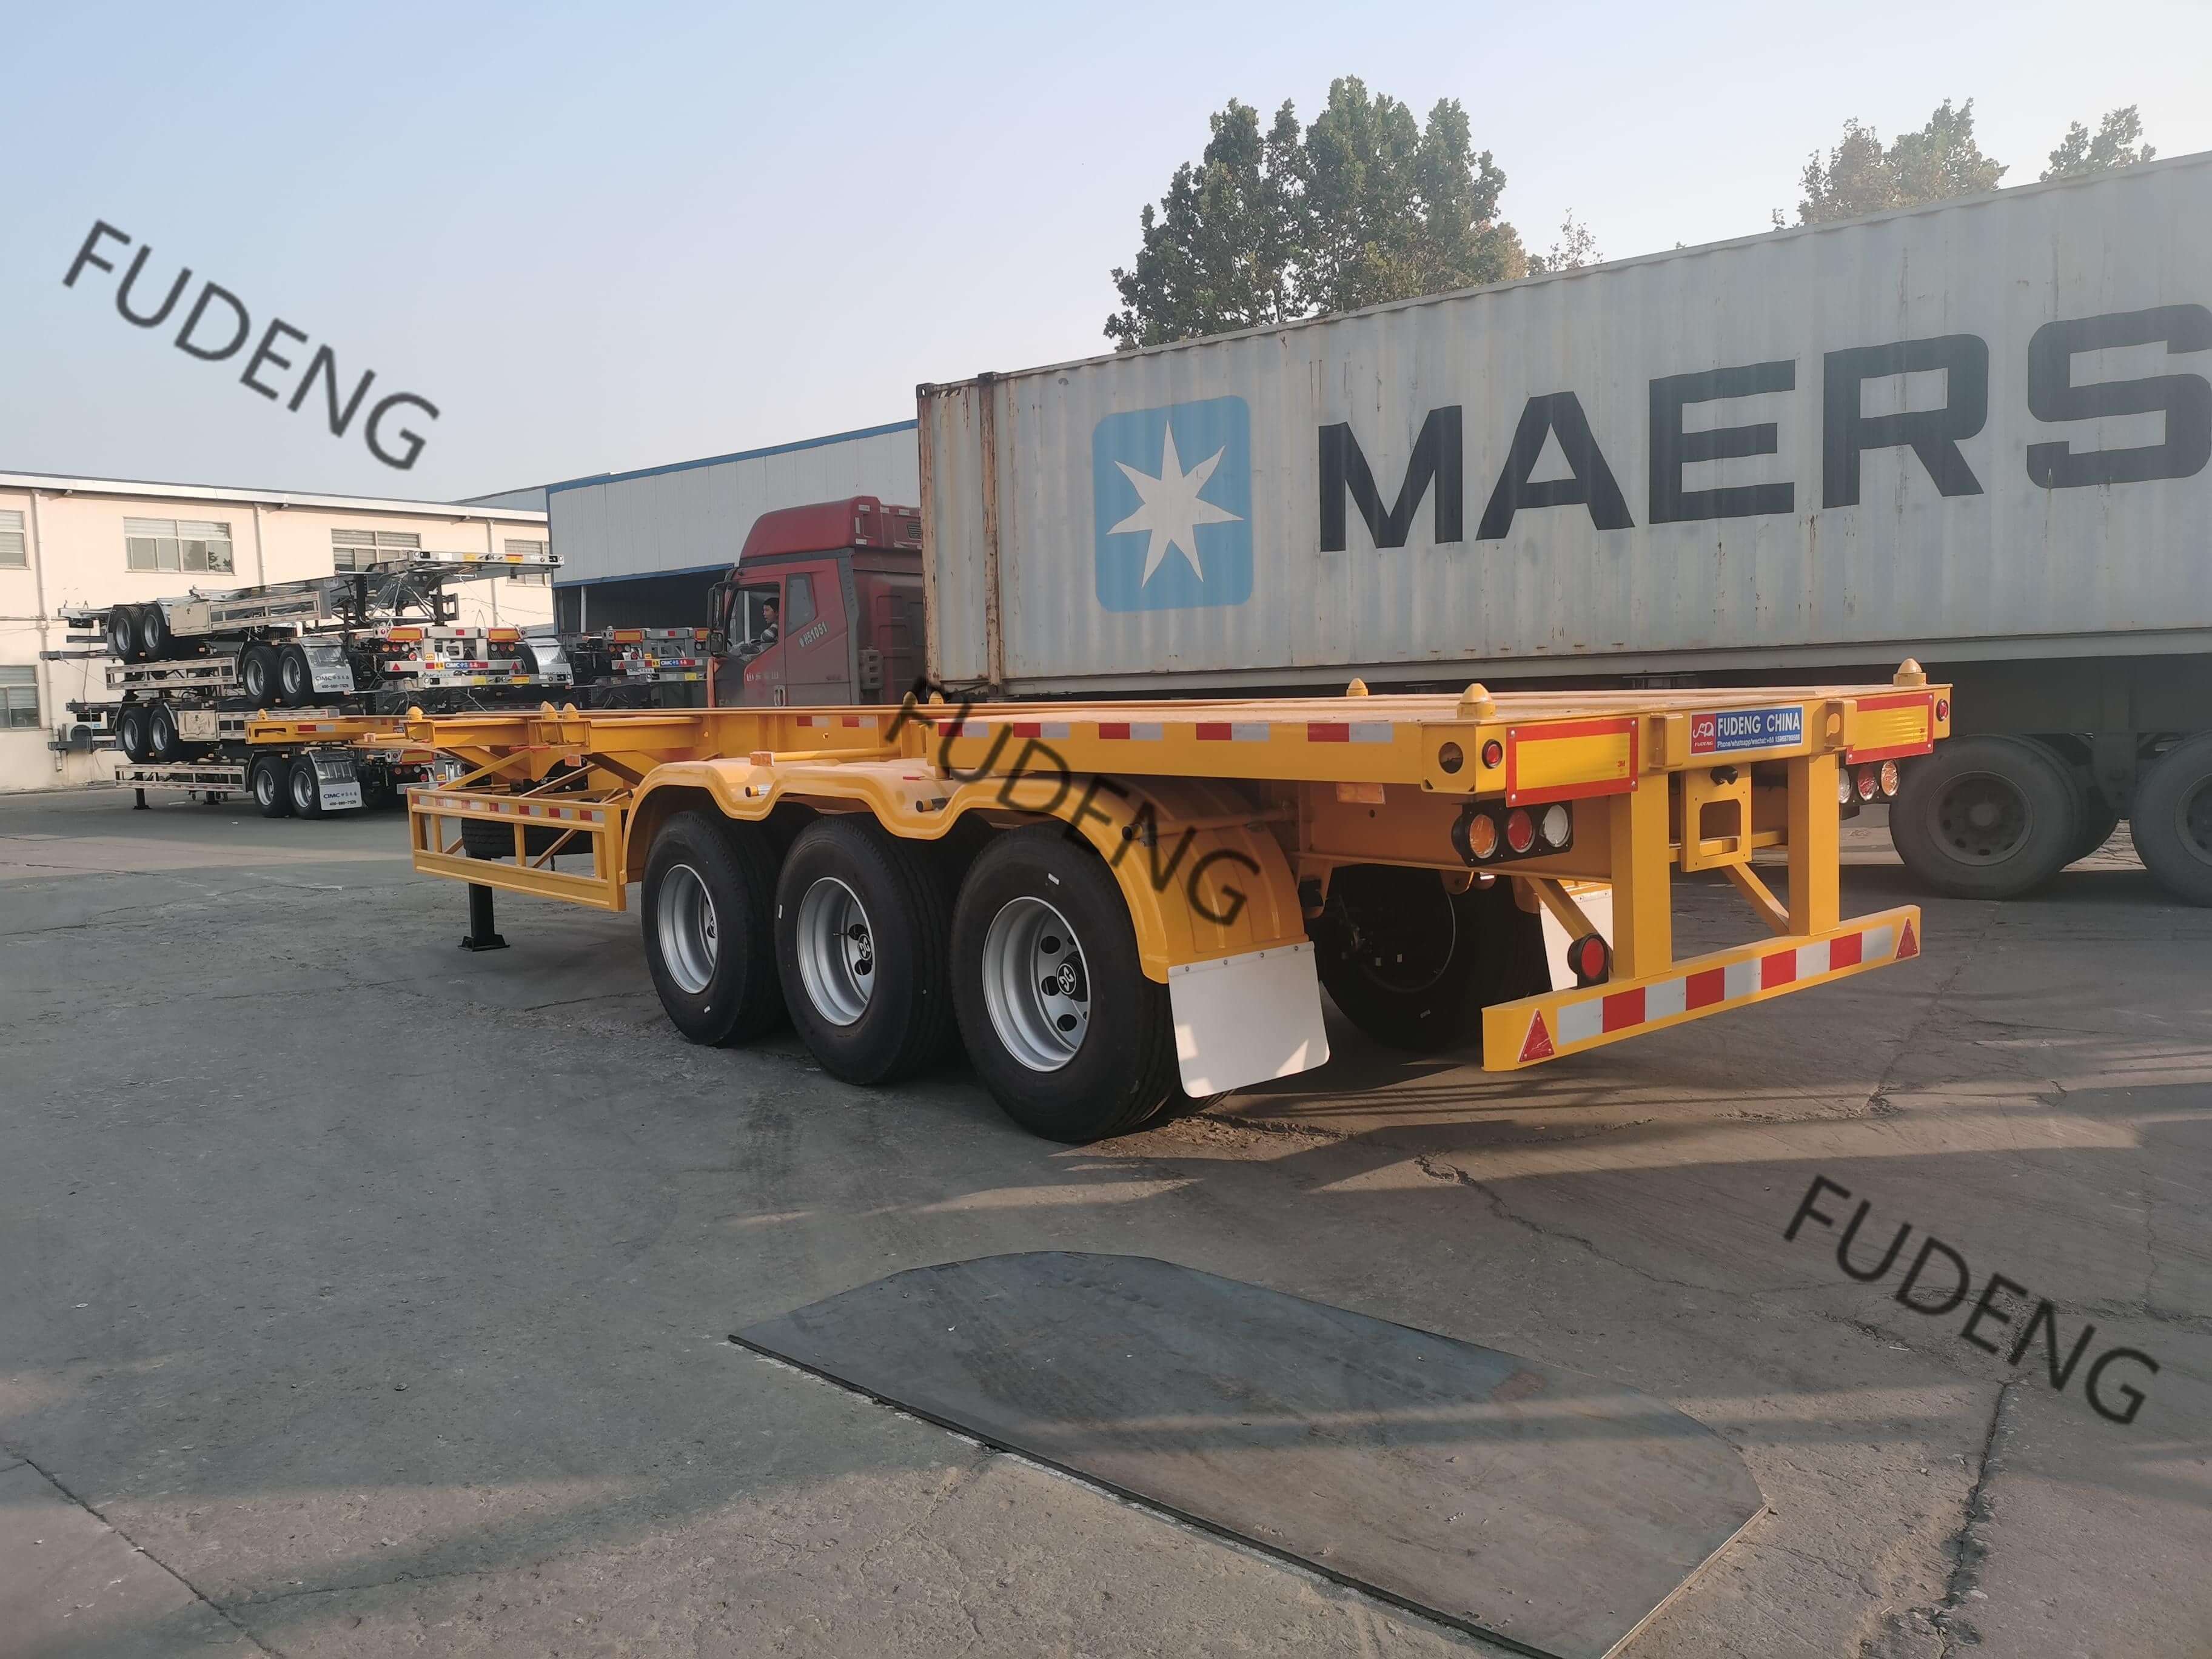 Fudeng skeleton trailer is ready to arrange sea shipping